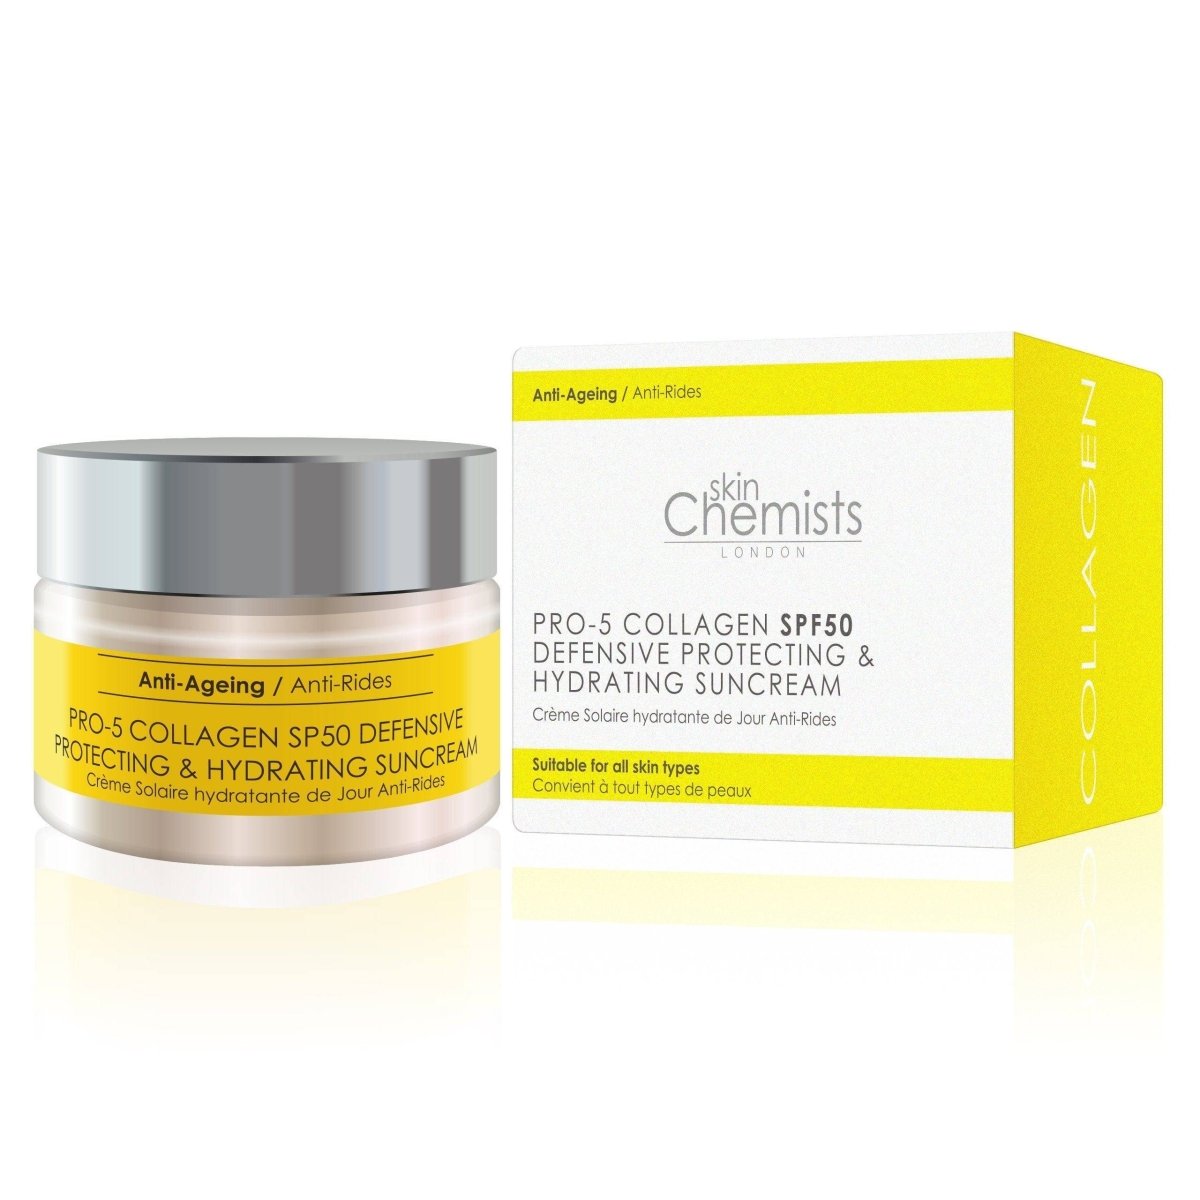 Pro - 5 Collagen Defensiv Anti - Ageing Protecting & Hydrating Sun Cream SPF 50 50ml - skinChemists